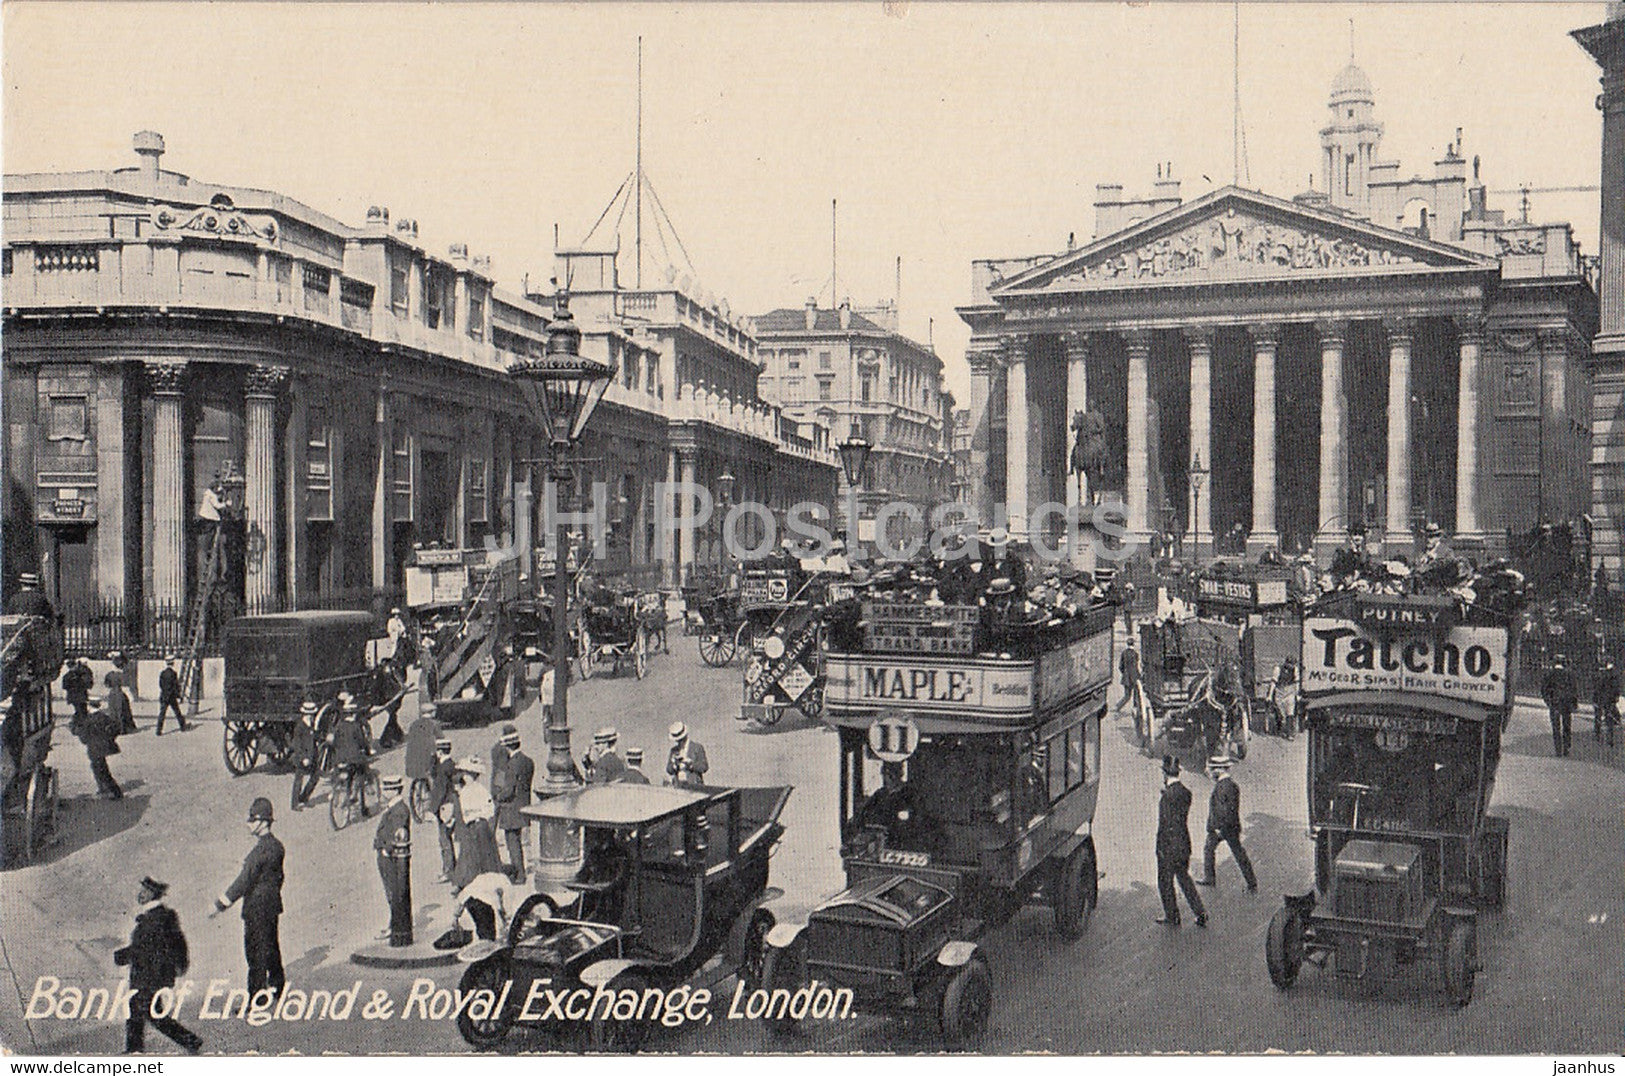 London - Bank of England & Royal Exchange - cars - old postcard - England - United Kingdom - unused - JH Postcards